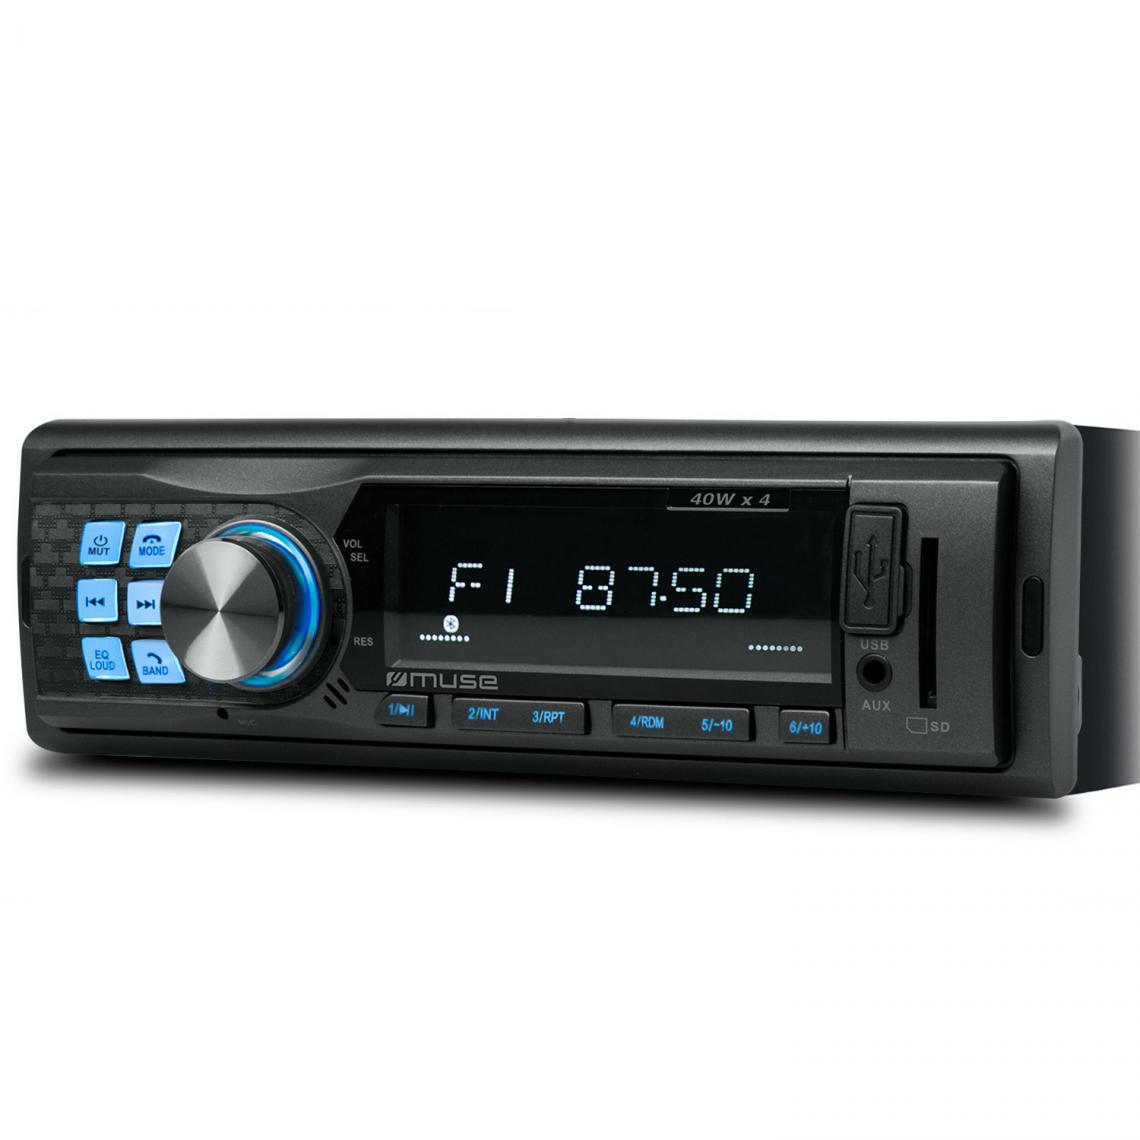 Muse - Autoradio Muse M-195 BT 160 Watts - FM stéréo - Port USB - Micro SD / Prise auxiliaire / Bluetooth 4 x 40 watts - Radio